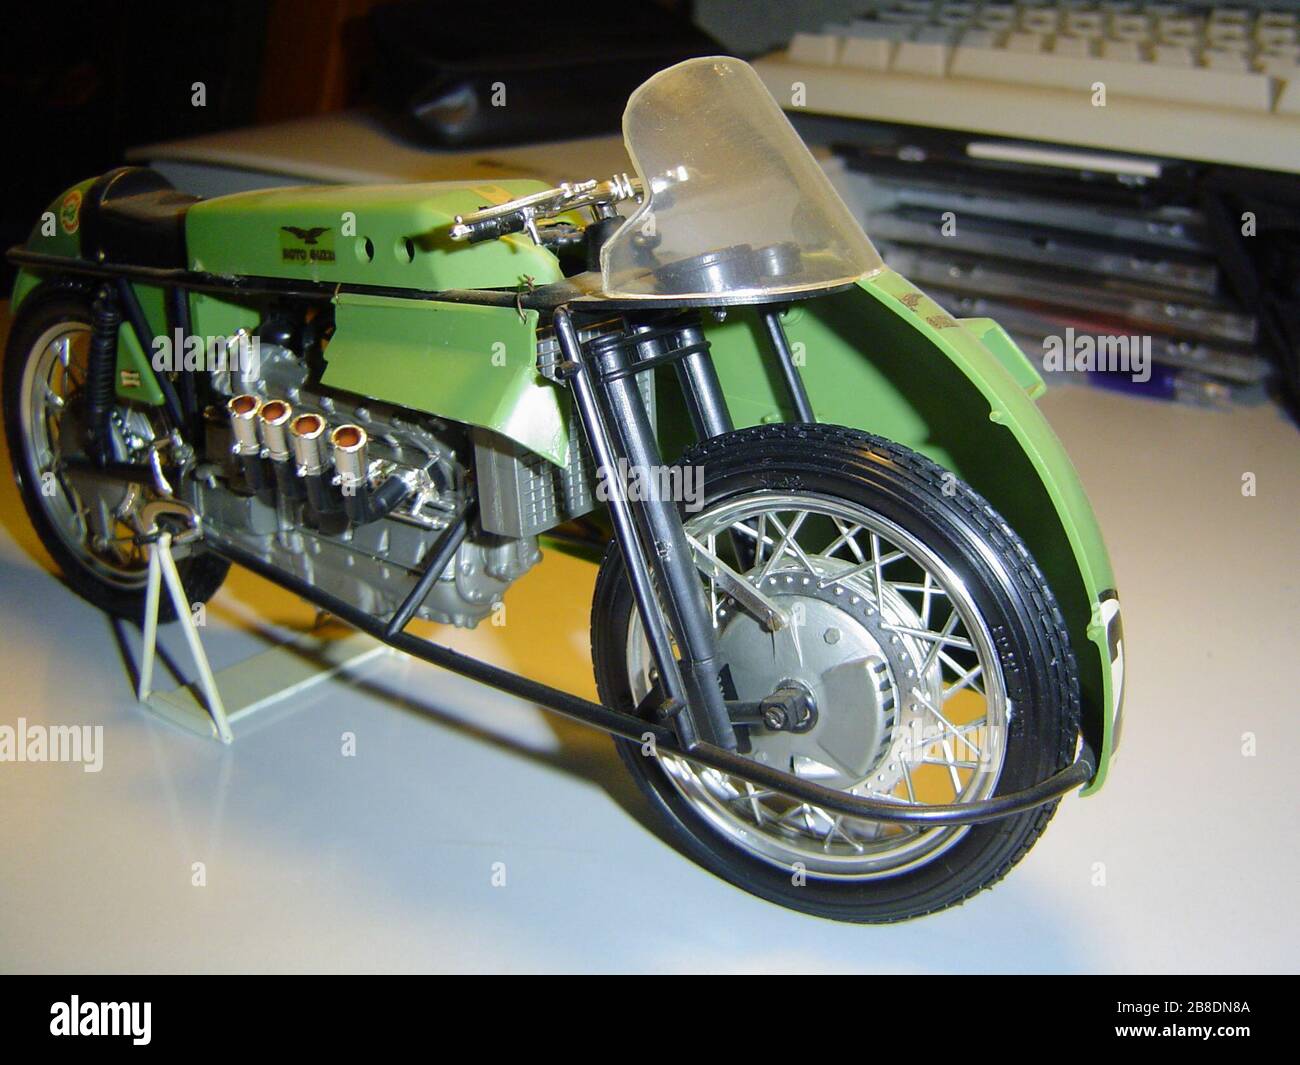 Original moto hi-res stock photography and images - Alamy